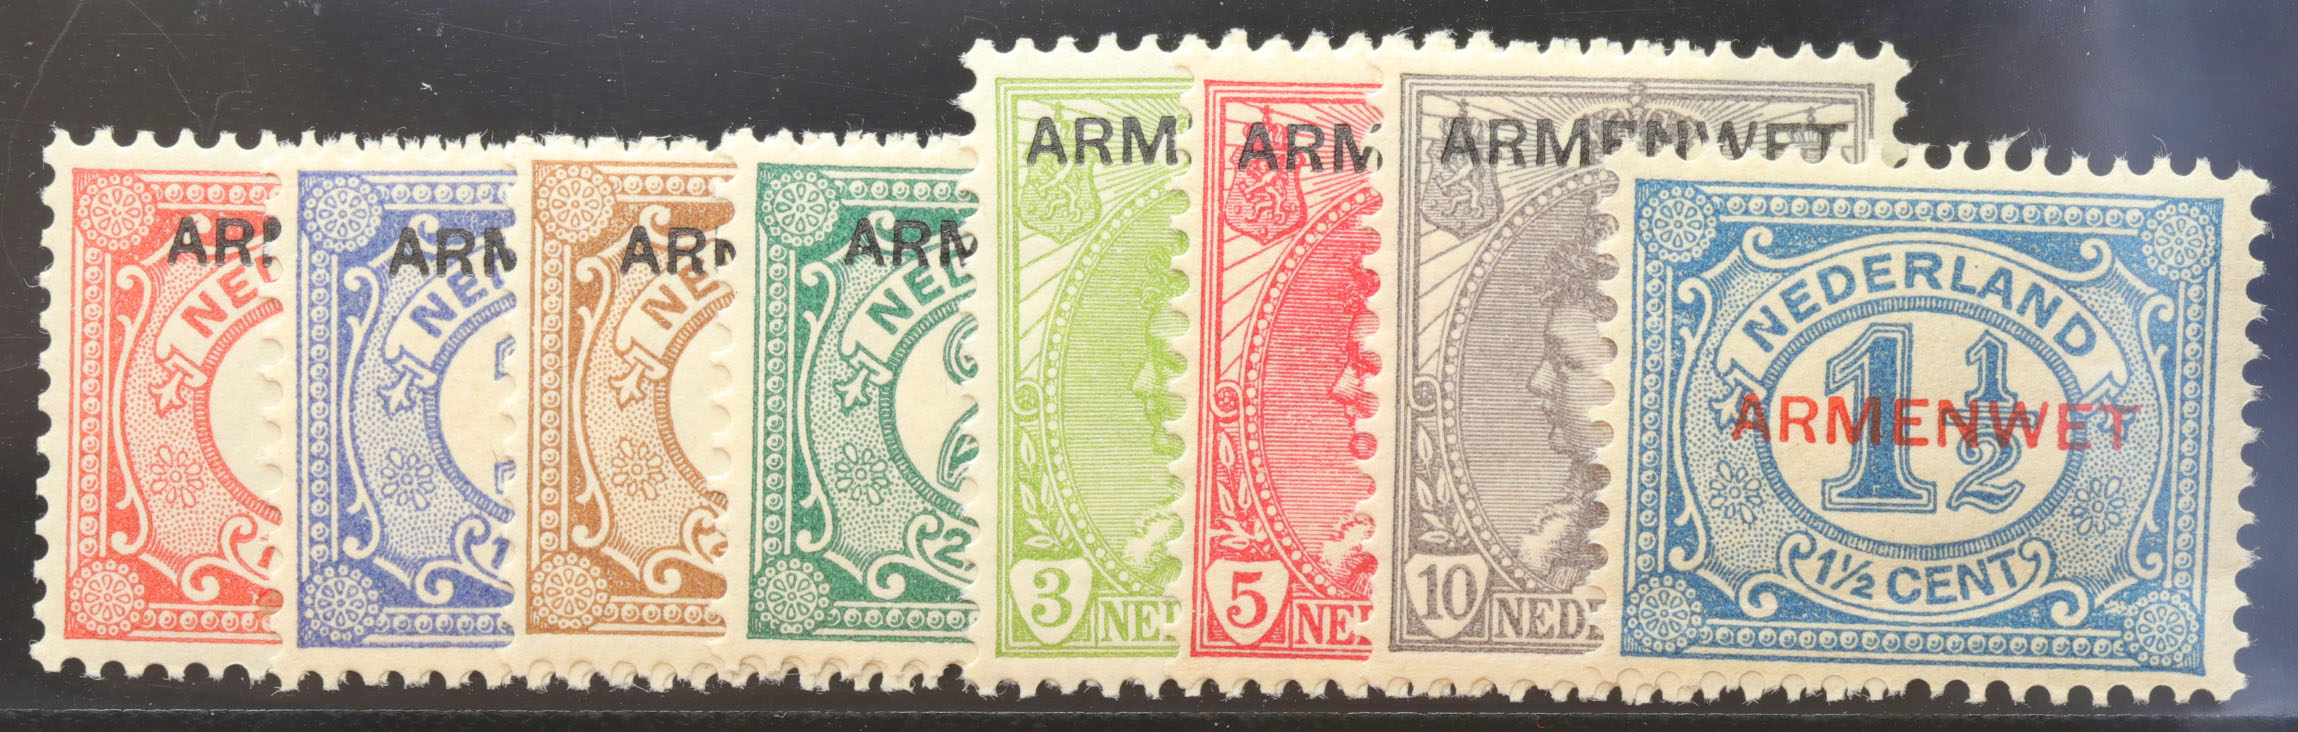 Nederland NVPH nr. D1/8 Armenwet 1913 postfris